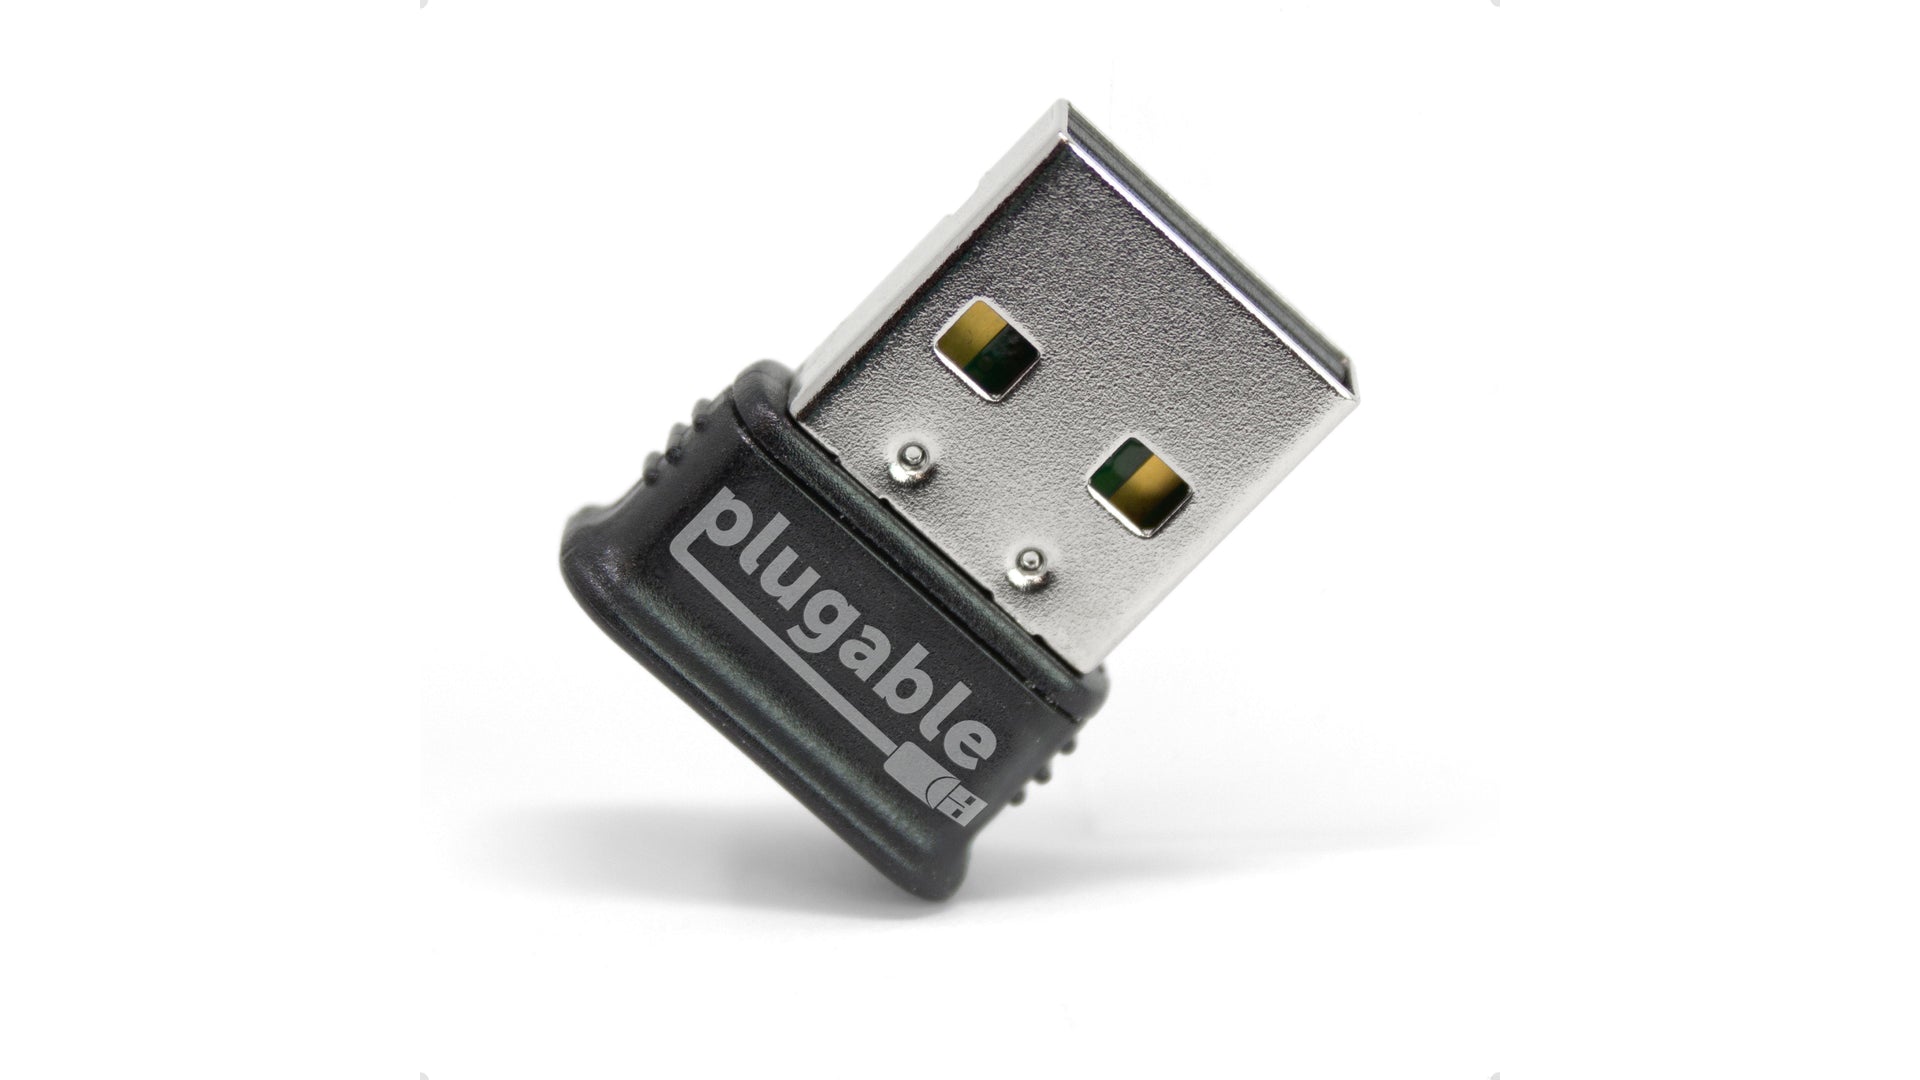 Realtek Bluetooth 4.0 Adapter. USB Bluetooth адаптер Baseus. Bluetooth адаптер ASUS USB-bt500. Адаптер Razer USB Dongle Adapter. Не видит bluetooth адаптер